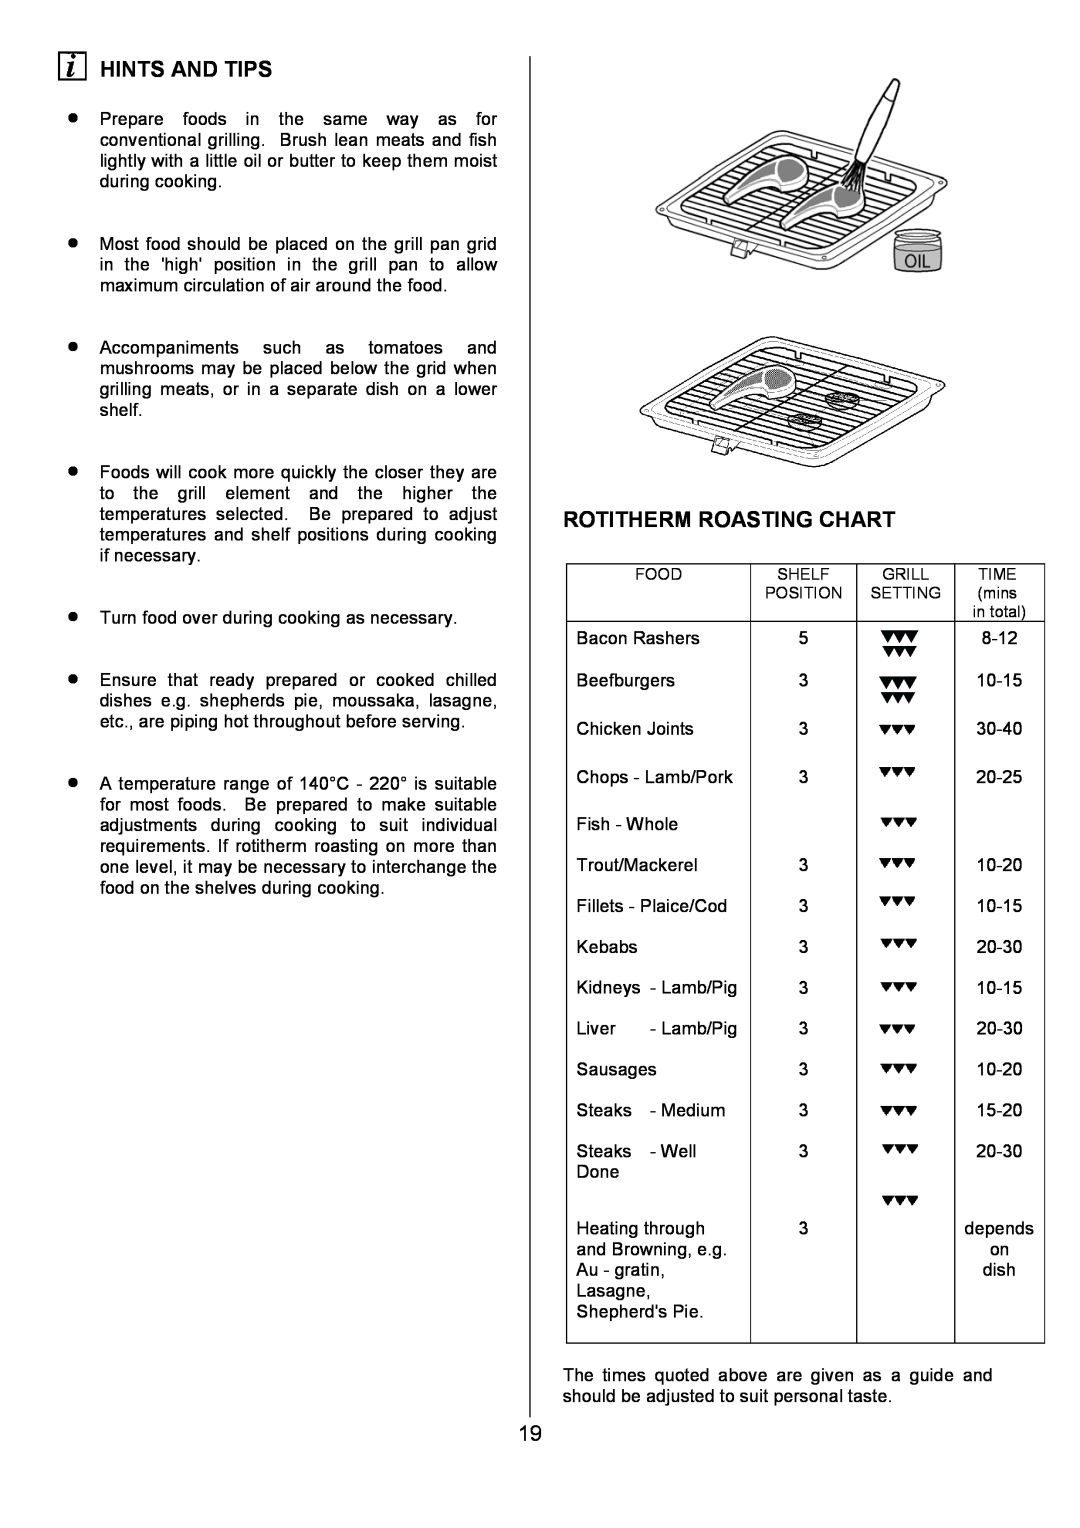 AEG 311704300, U7101-4 manual Rotitherm Roasting Chart, Hints And Tips 